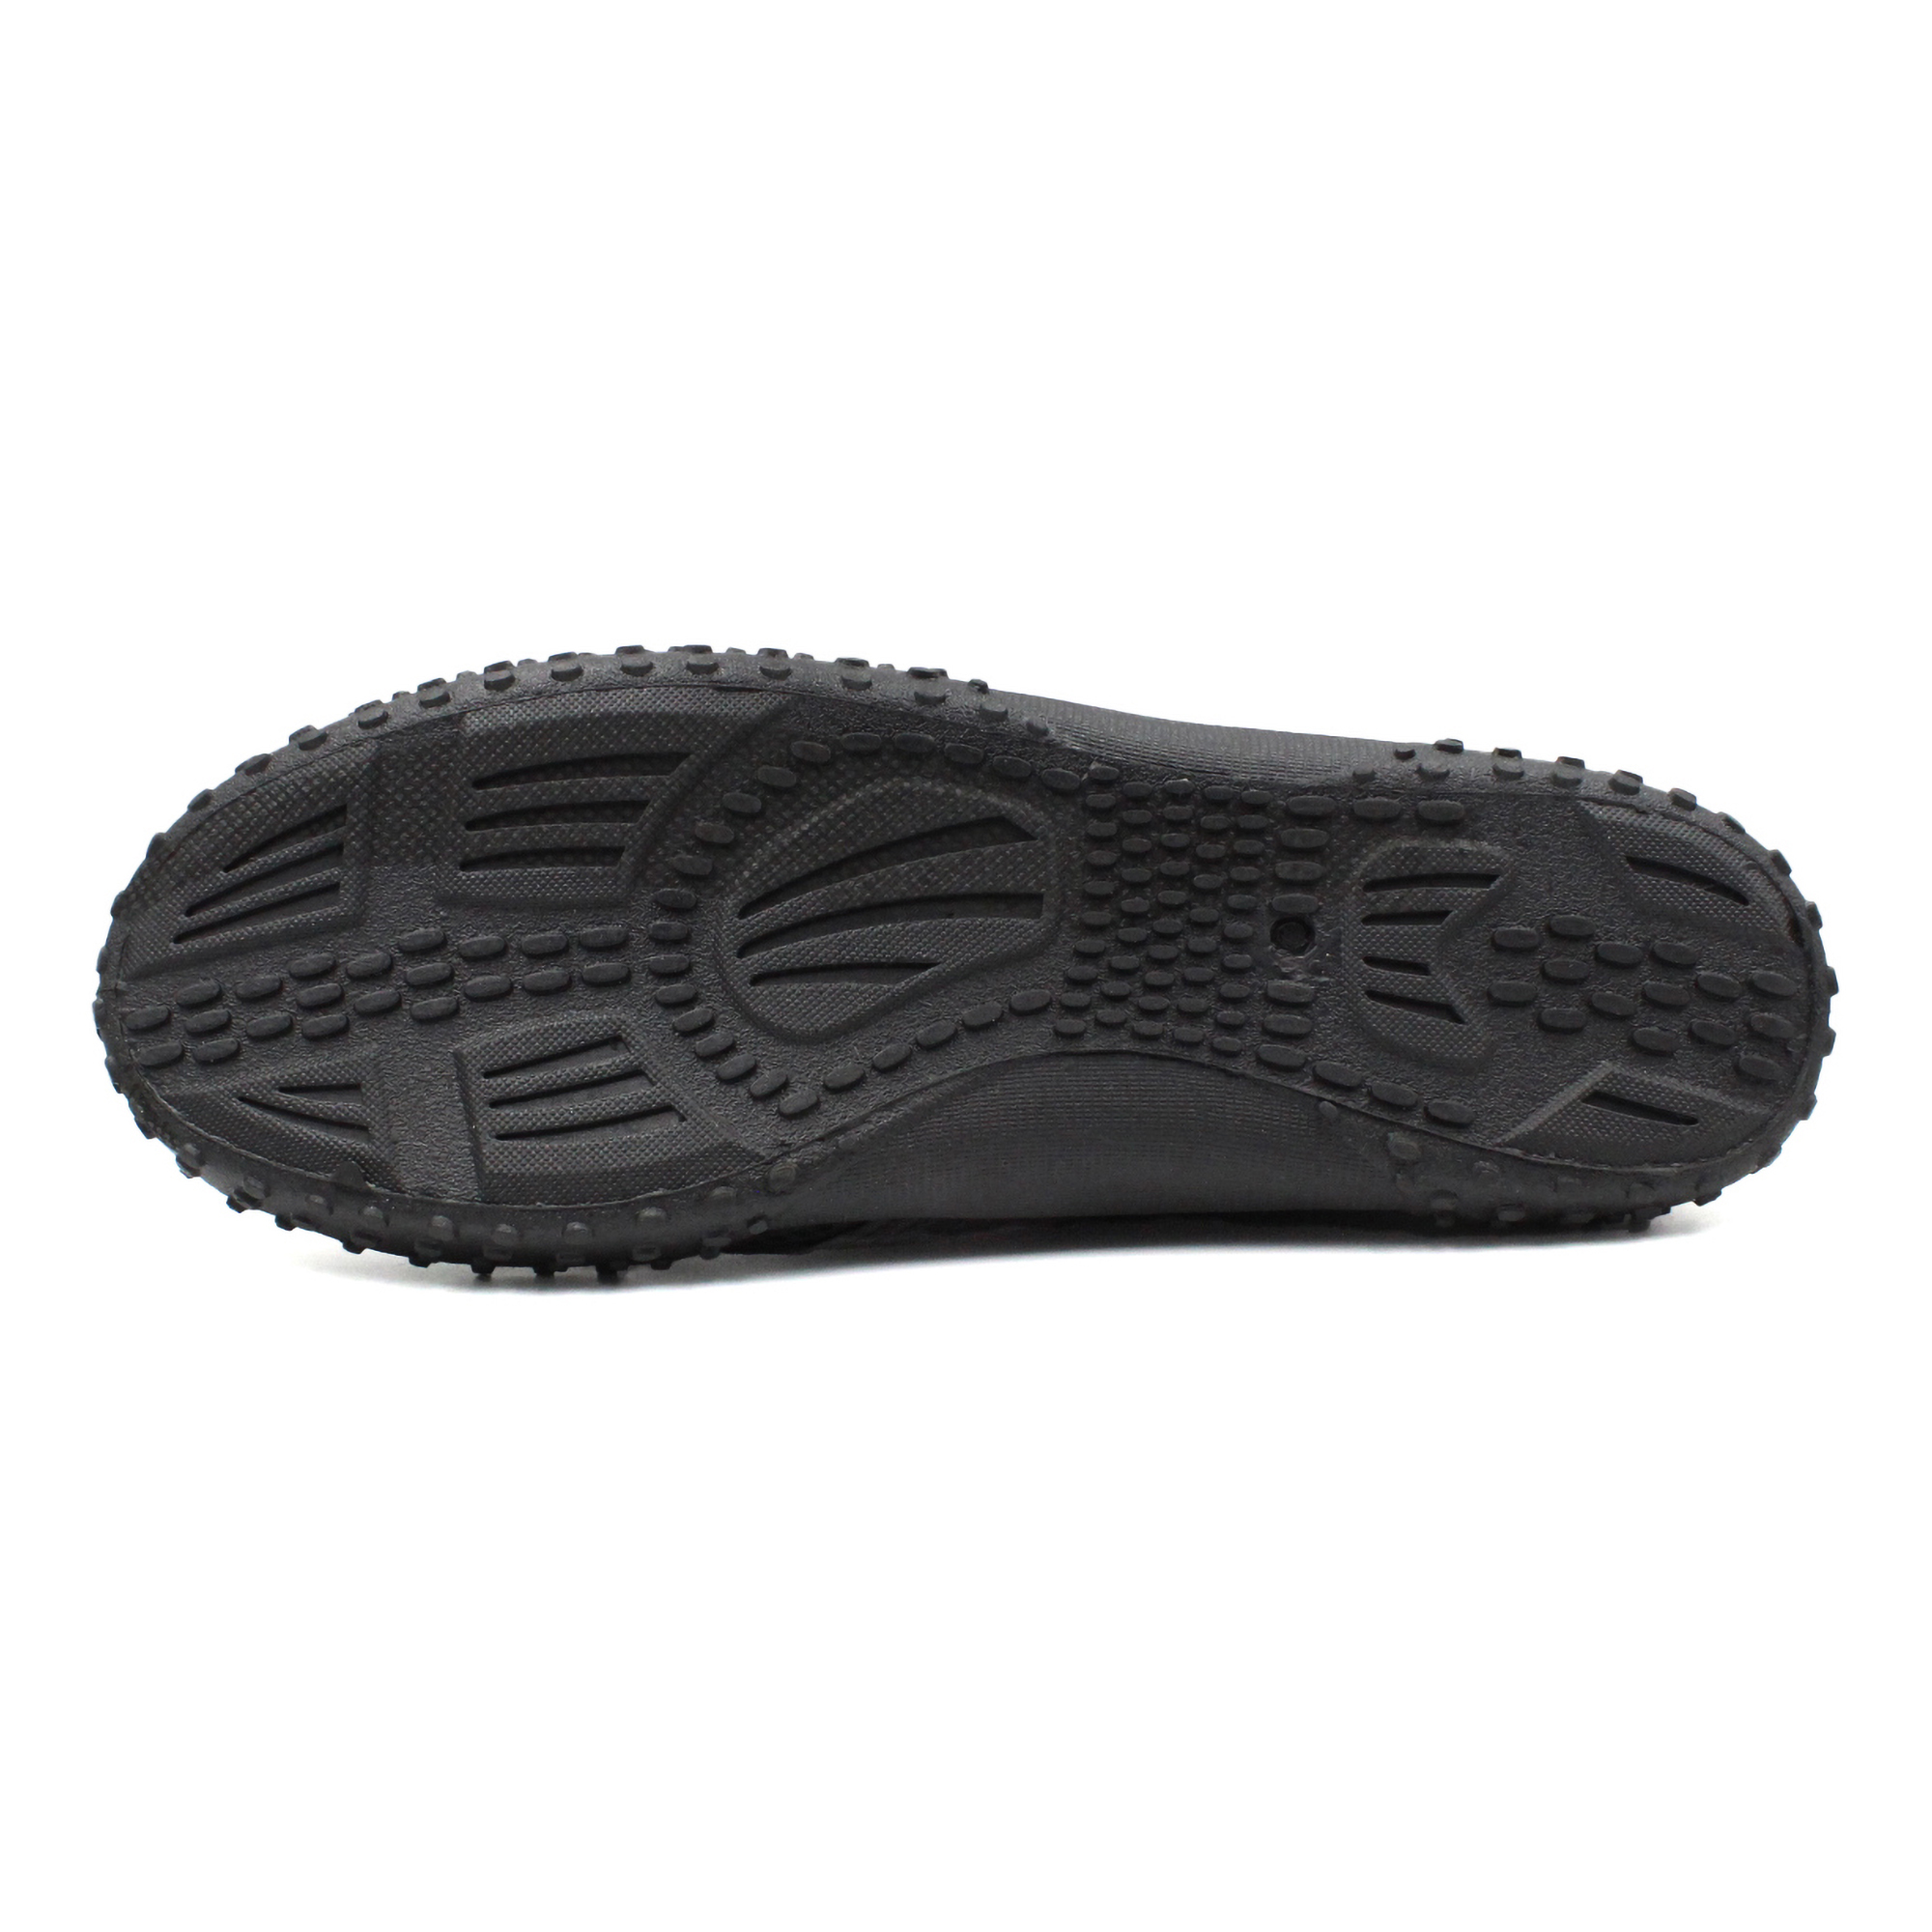 Ventana Men's Water Shoes Beach Aqua Sock Quick Dry Pool Slip On Sandals - image 5 of 5